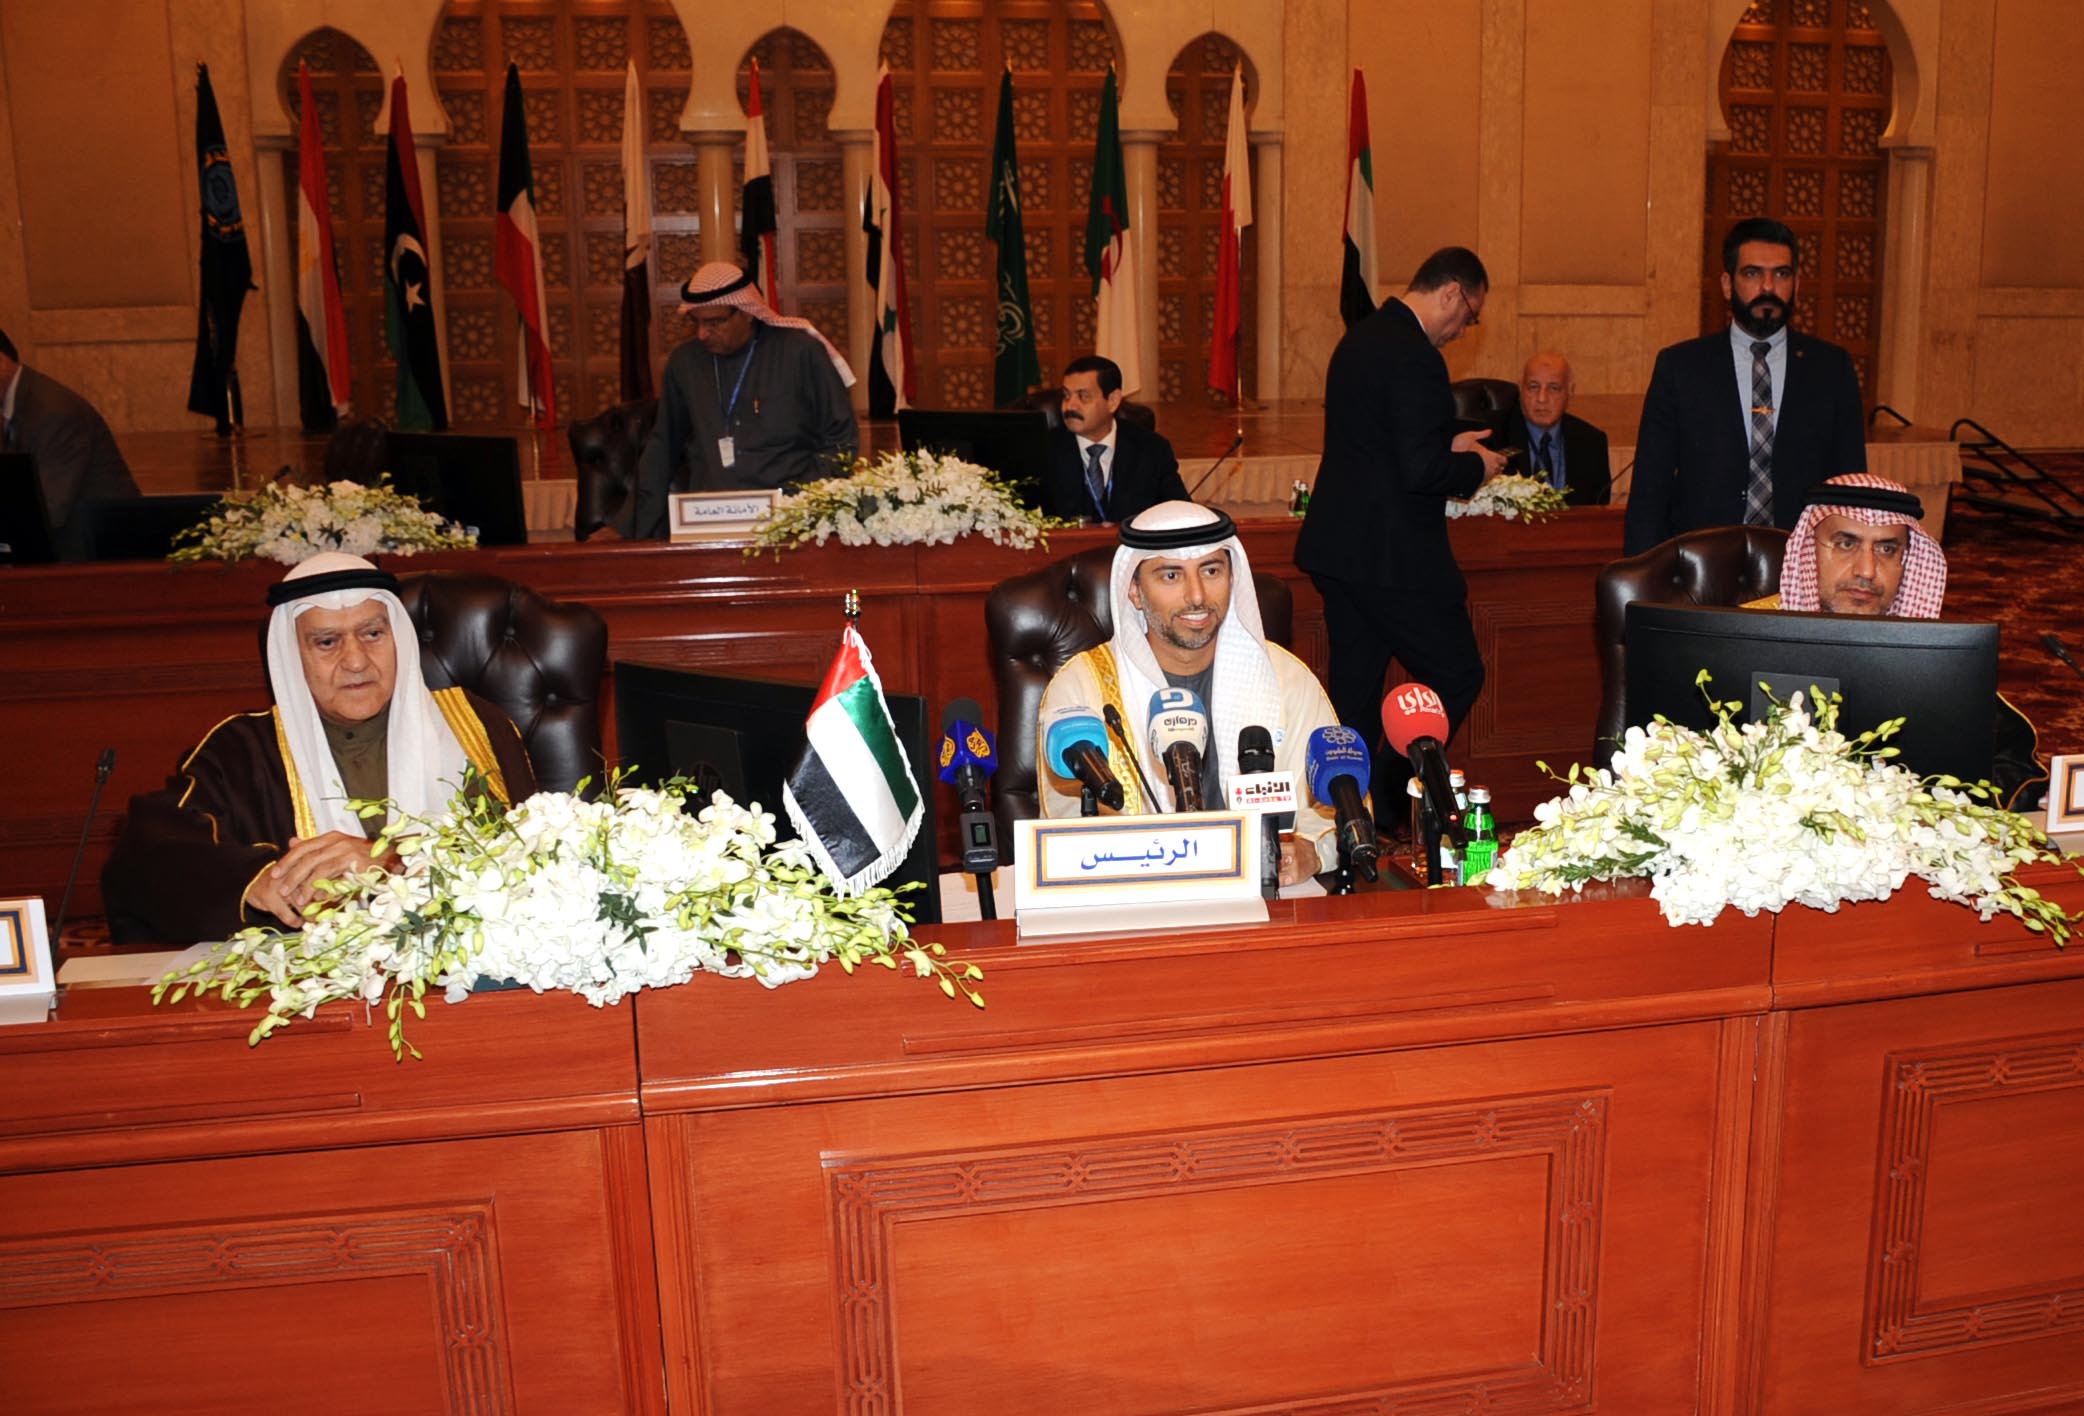 UAE Minister of Energy Suhail Al-Mazroui Speaks to the meeting